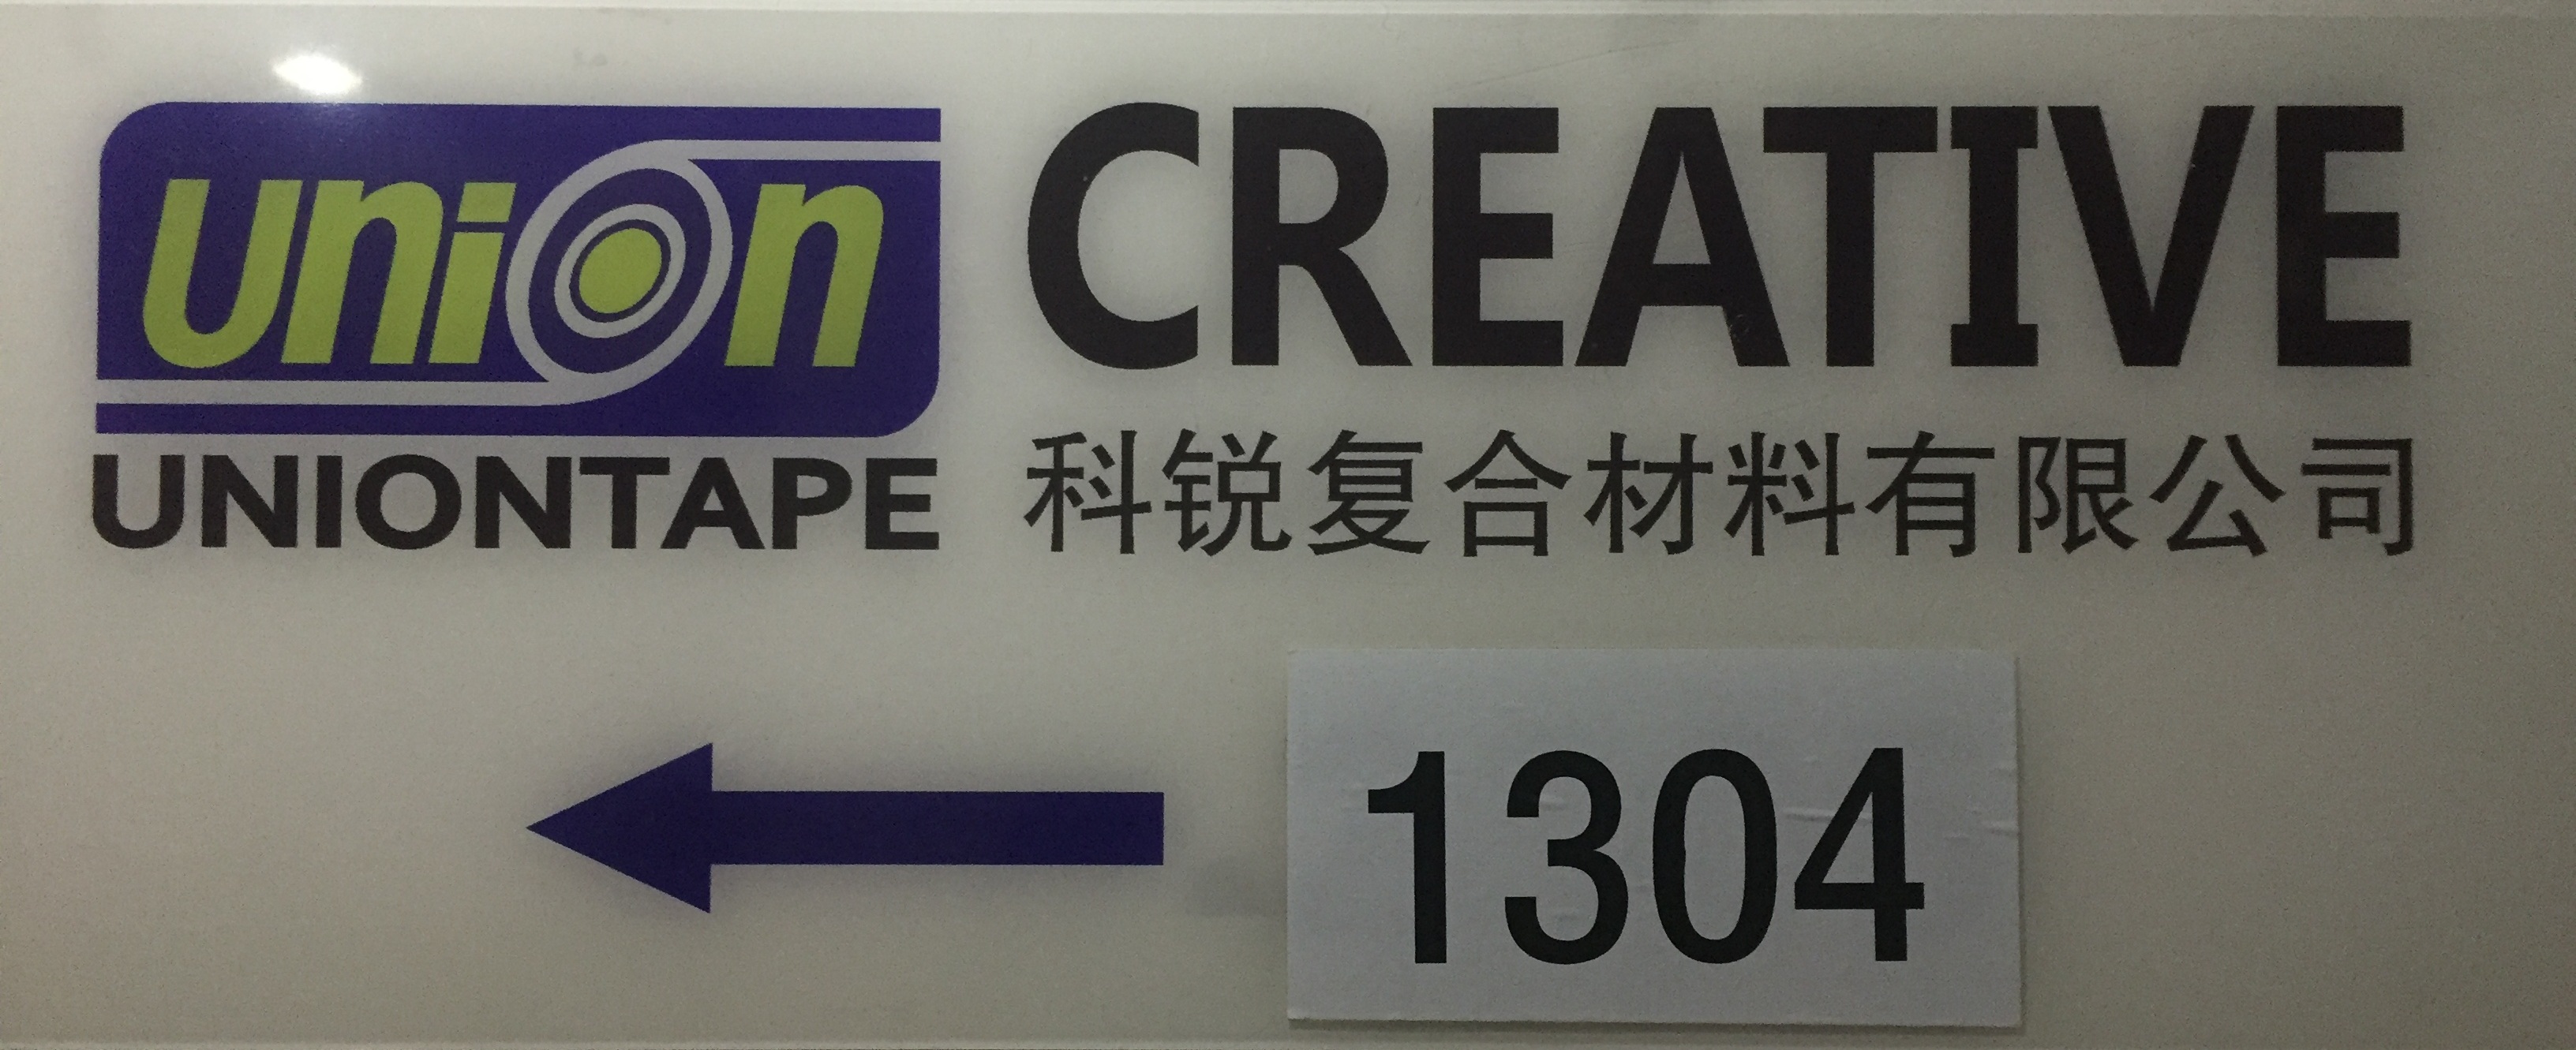 Uniontape's Shanghai office moves